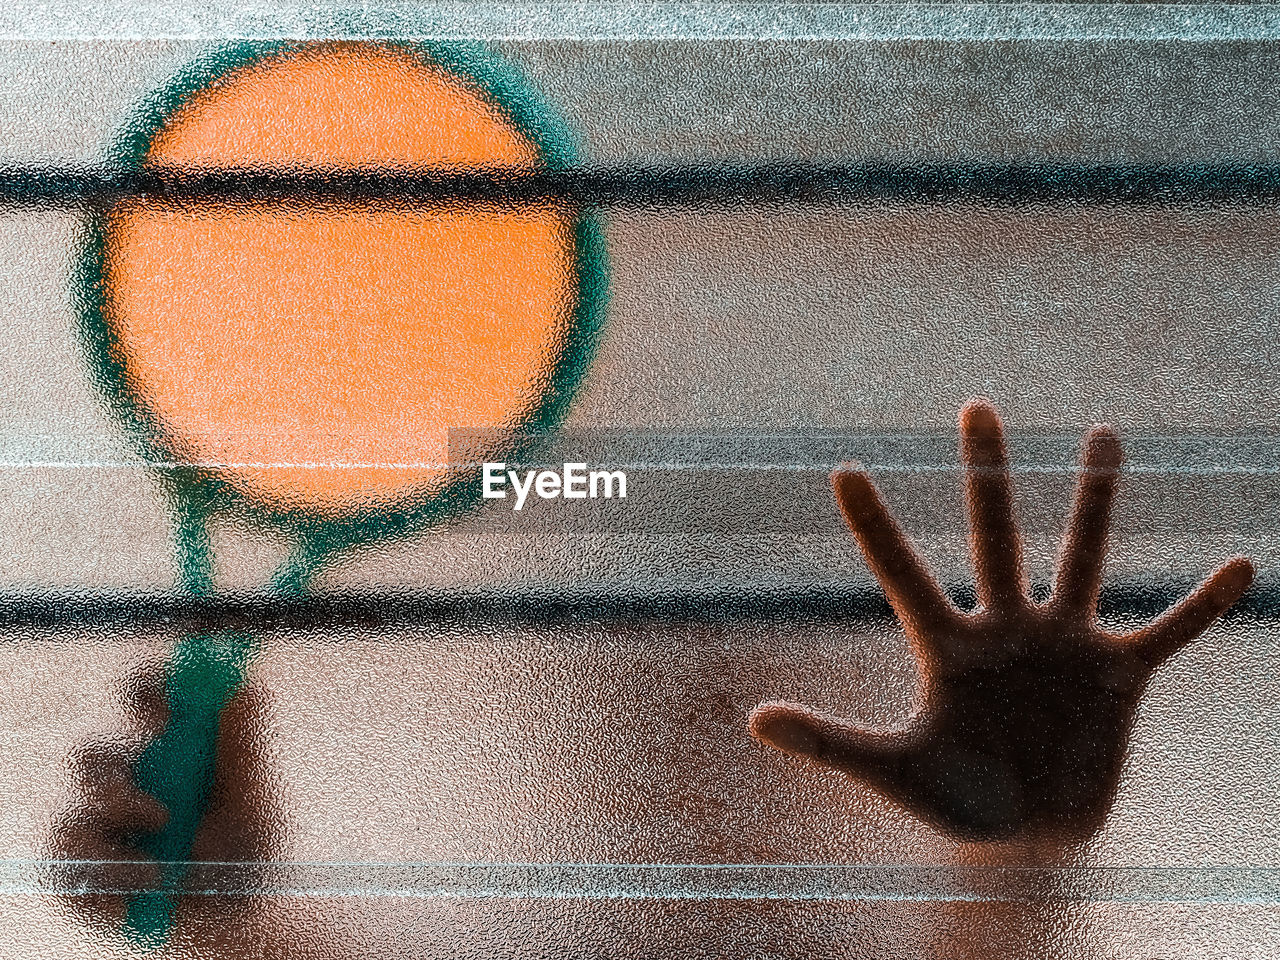 Close-up of a boy's hand holding a badminton racquet behing a textured glass window